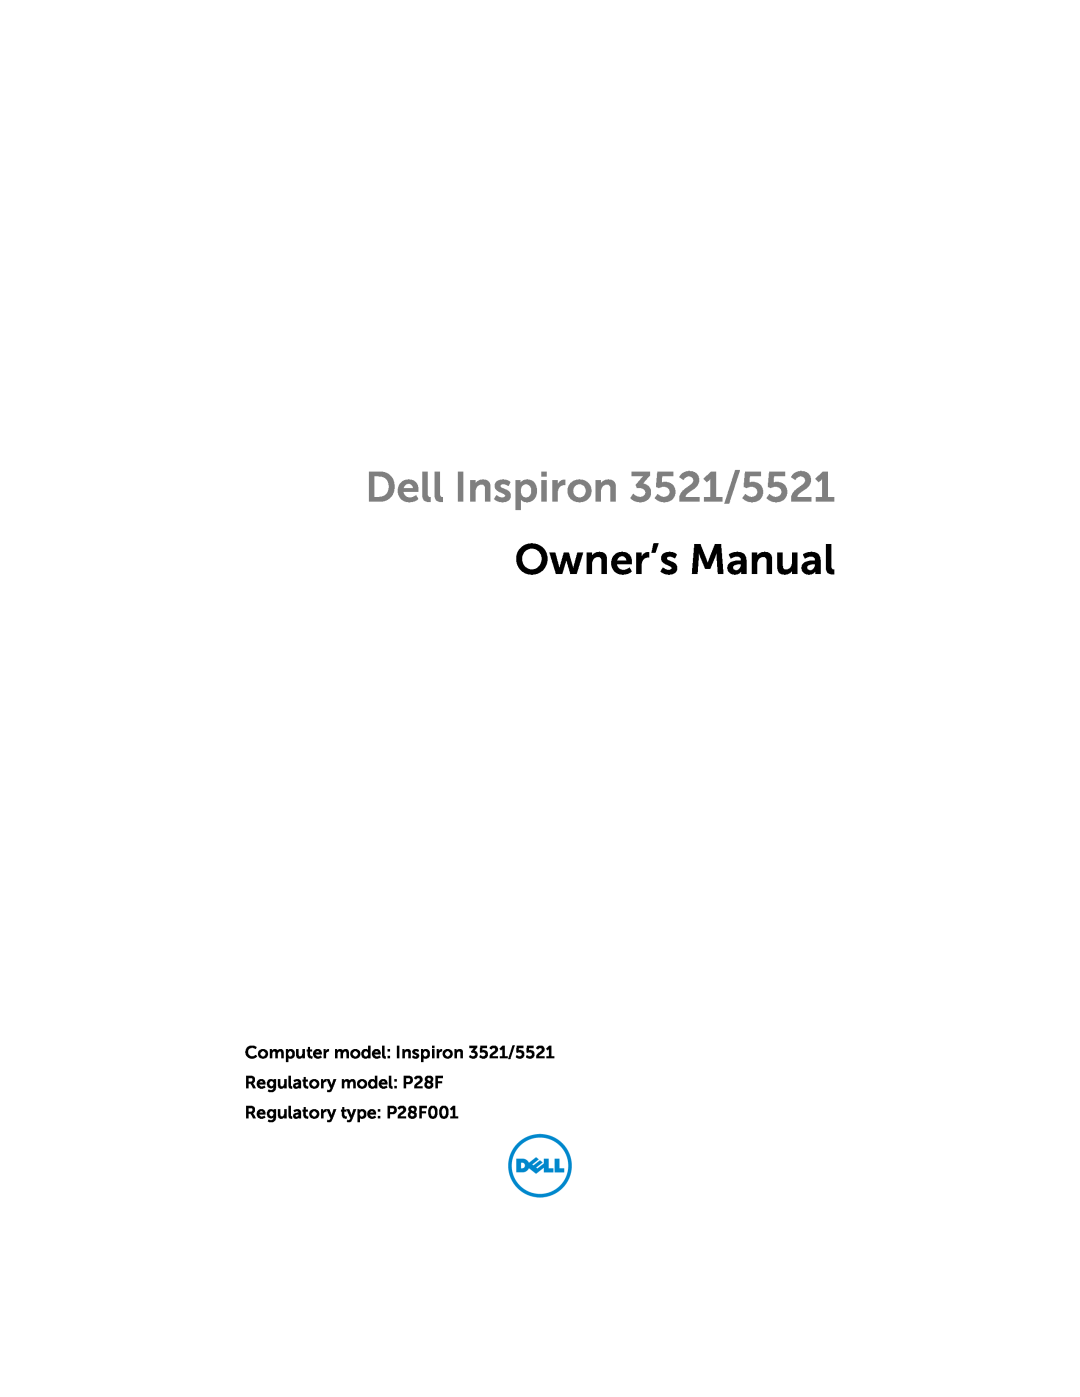 Dell manual Dell Inspiron 3521/5521, Owner’s Manual, Computer model Inspiron 3521/5521 Regulatory model P28F 